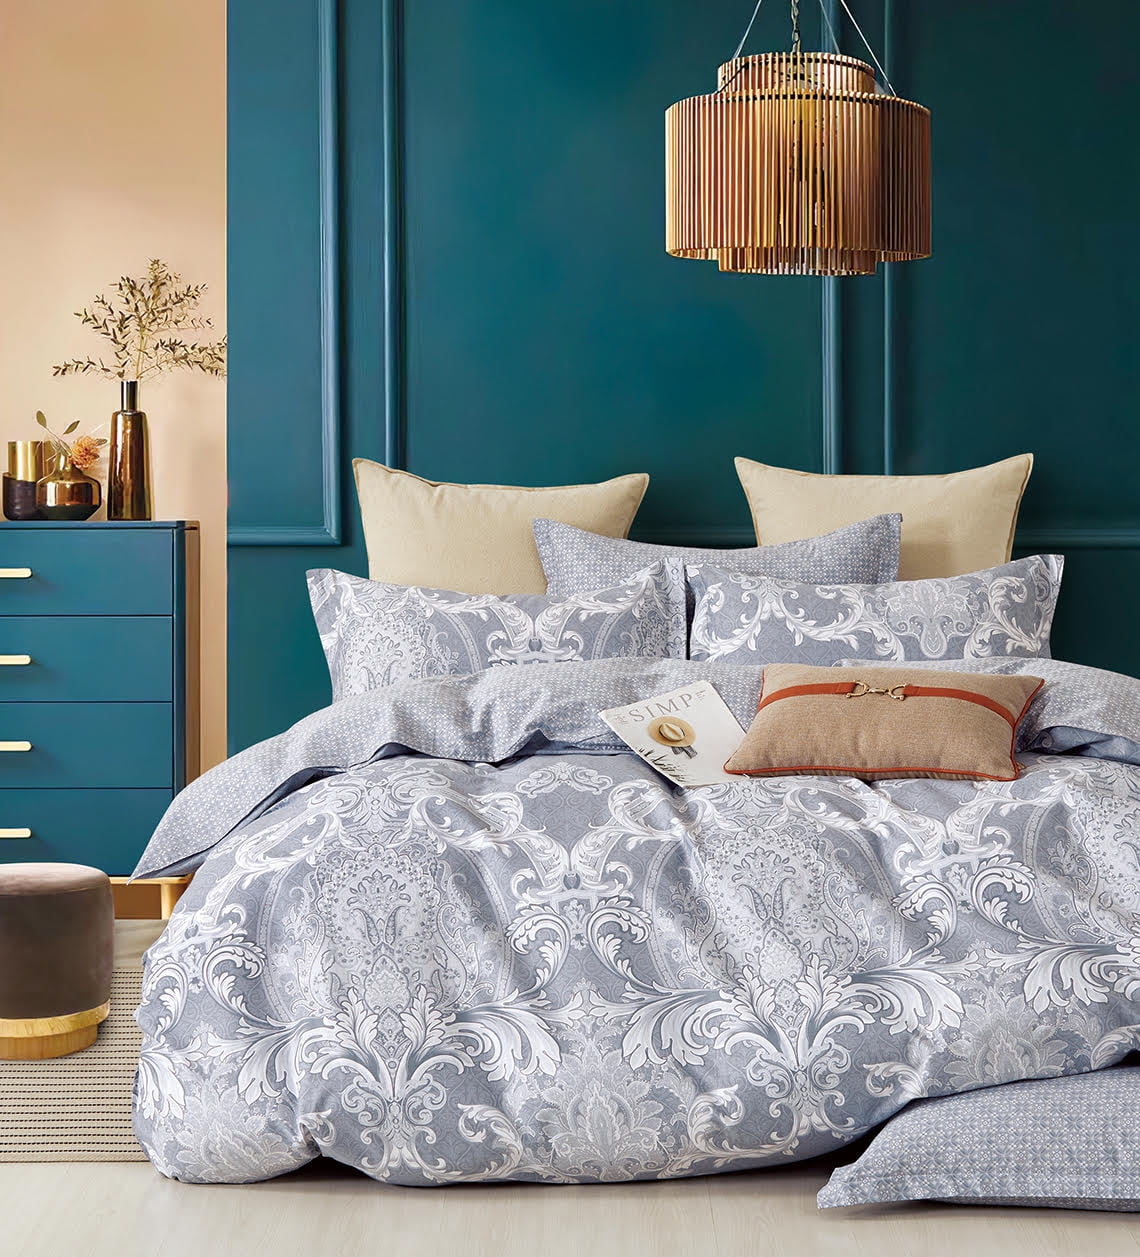 Oak Tree Textured Jacquard Luxury Plum Duvet Quilt Cover Bedding Sets 